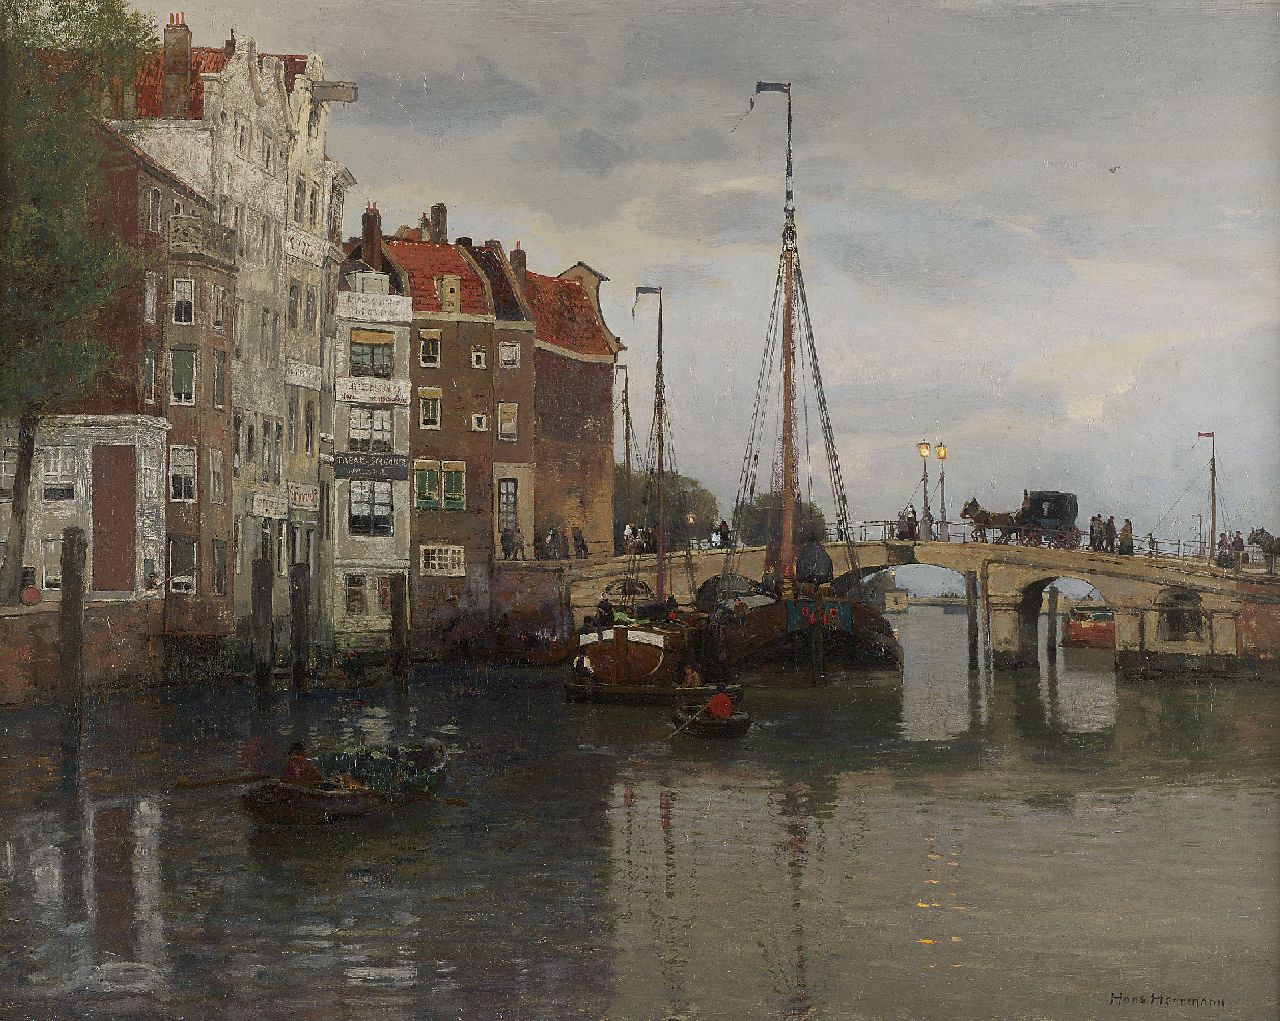 Herrmann J.E.R.  | Johann Emil Rudolf 'Hans' Herrmann, A view of a Dutch town, oil on canvas 49.0 x 60.0 cm, signed l.r.